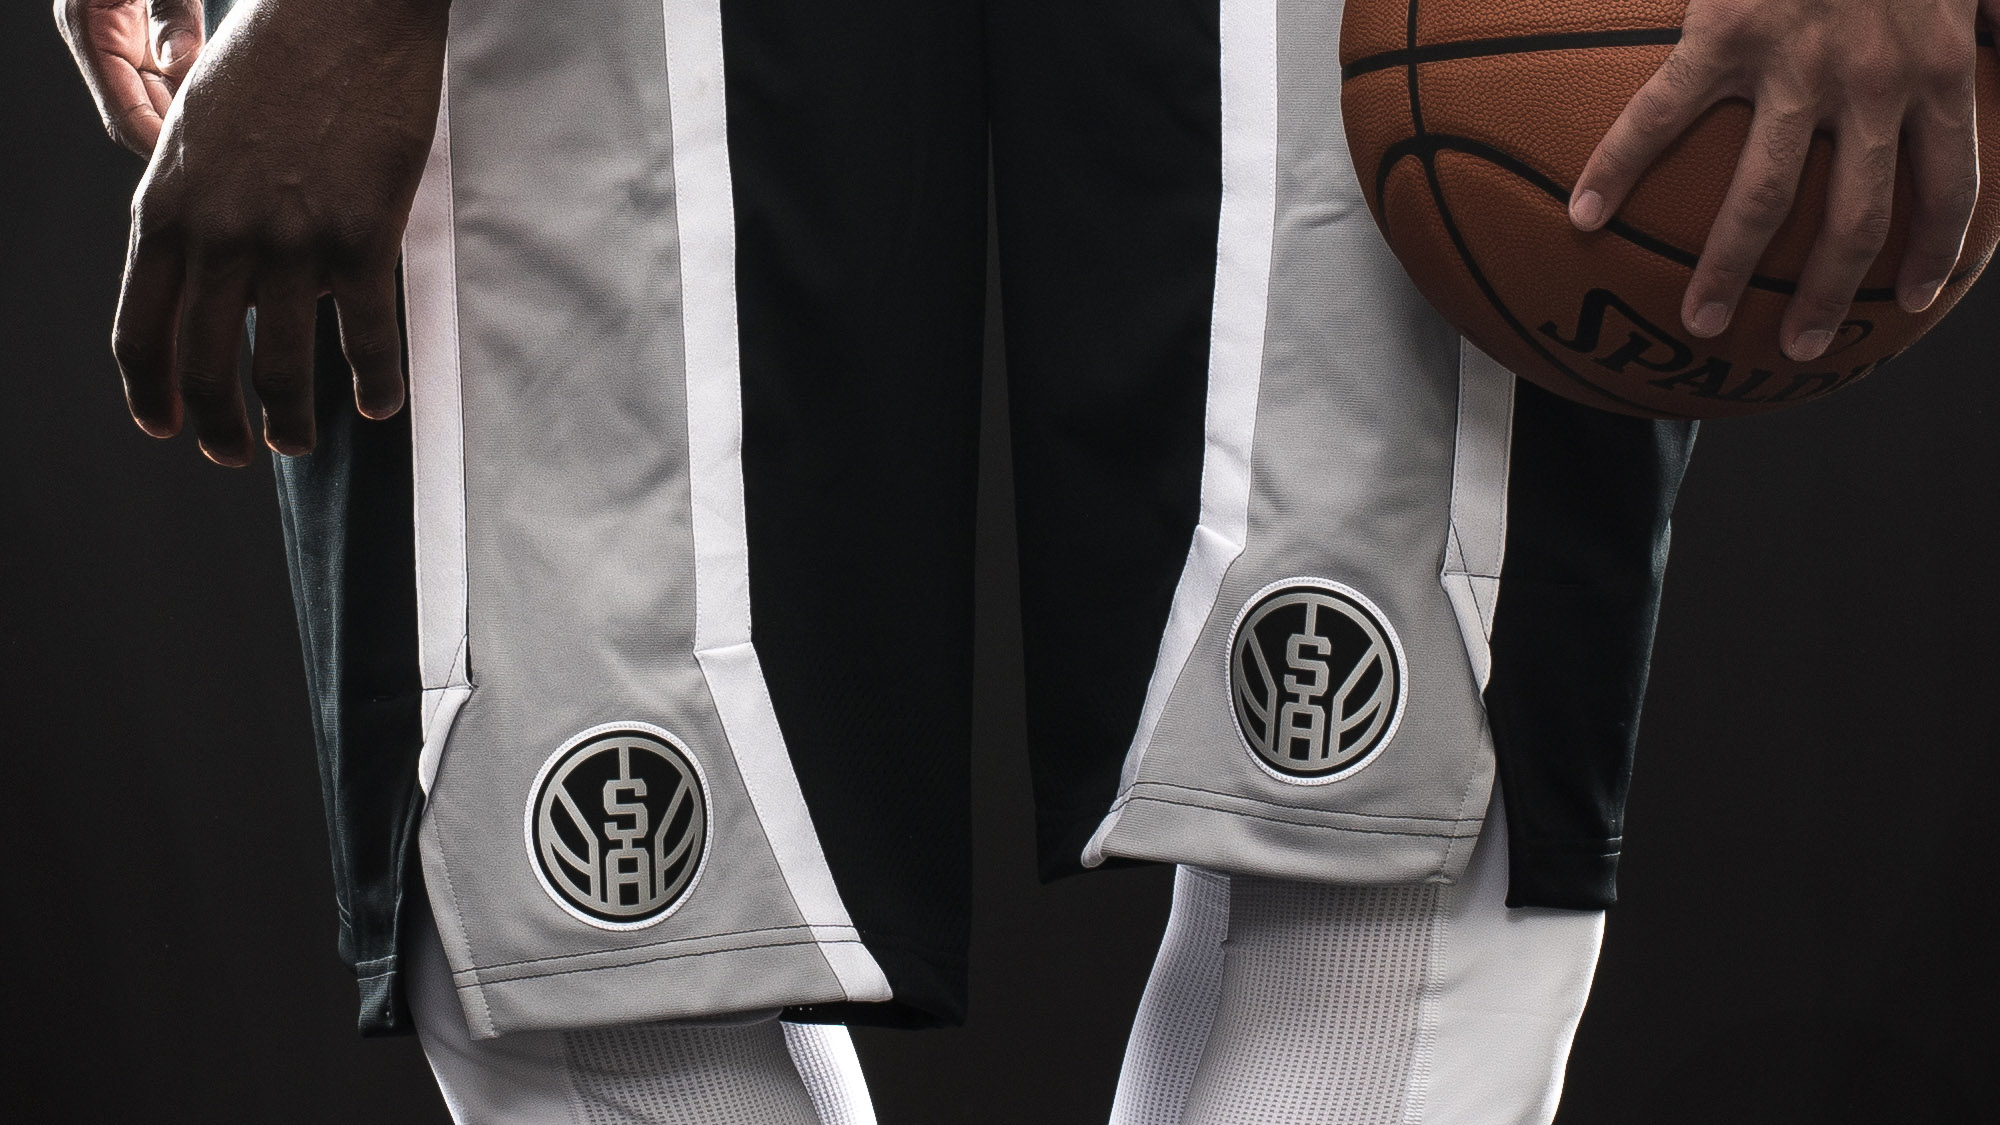 San Antonio Spurs: Historic influences for Nike's new uniforms